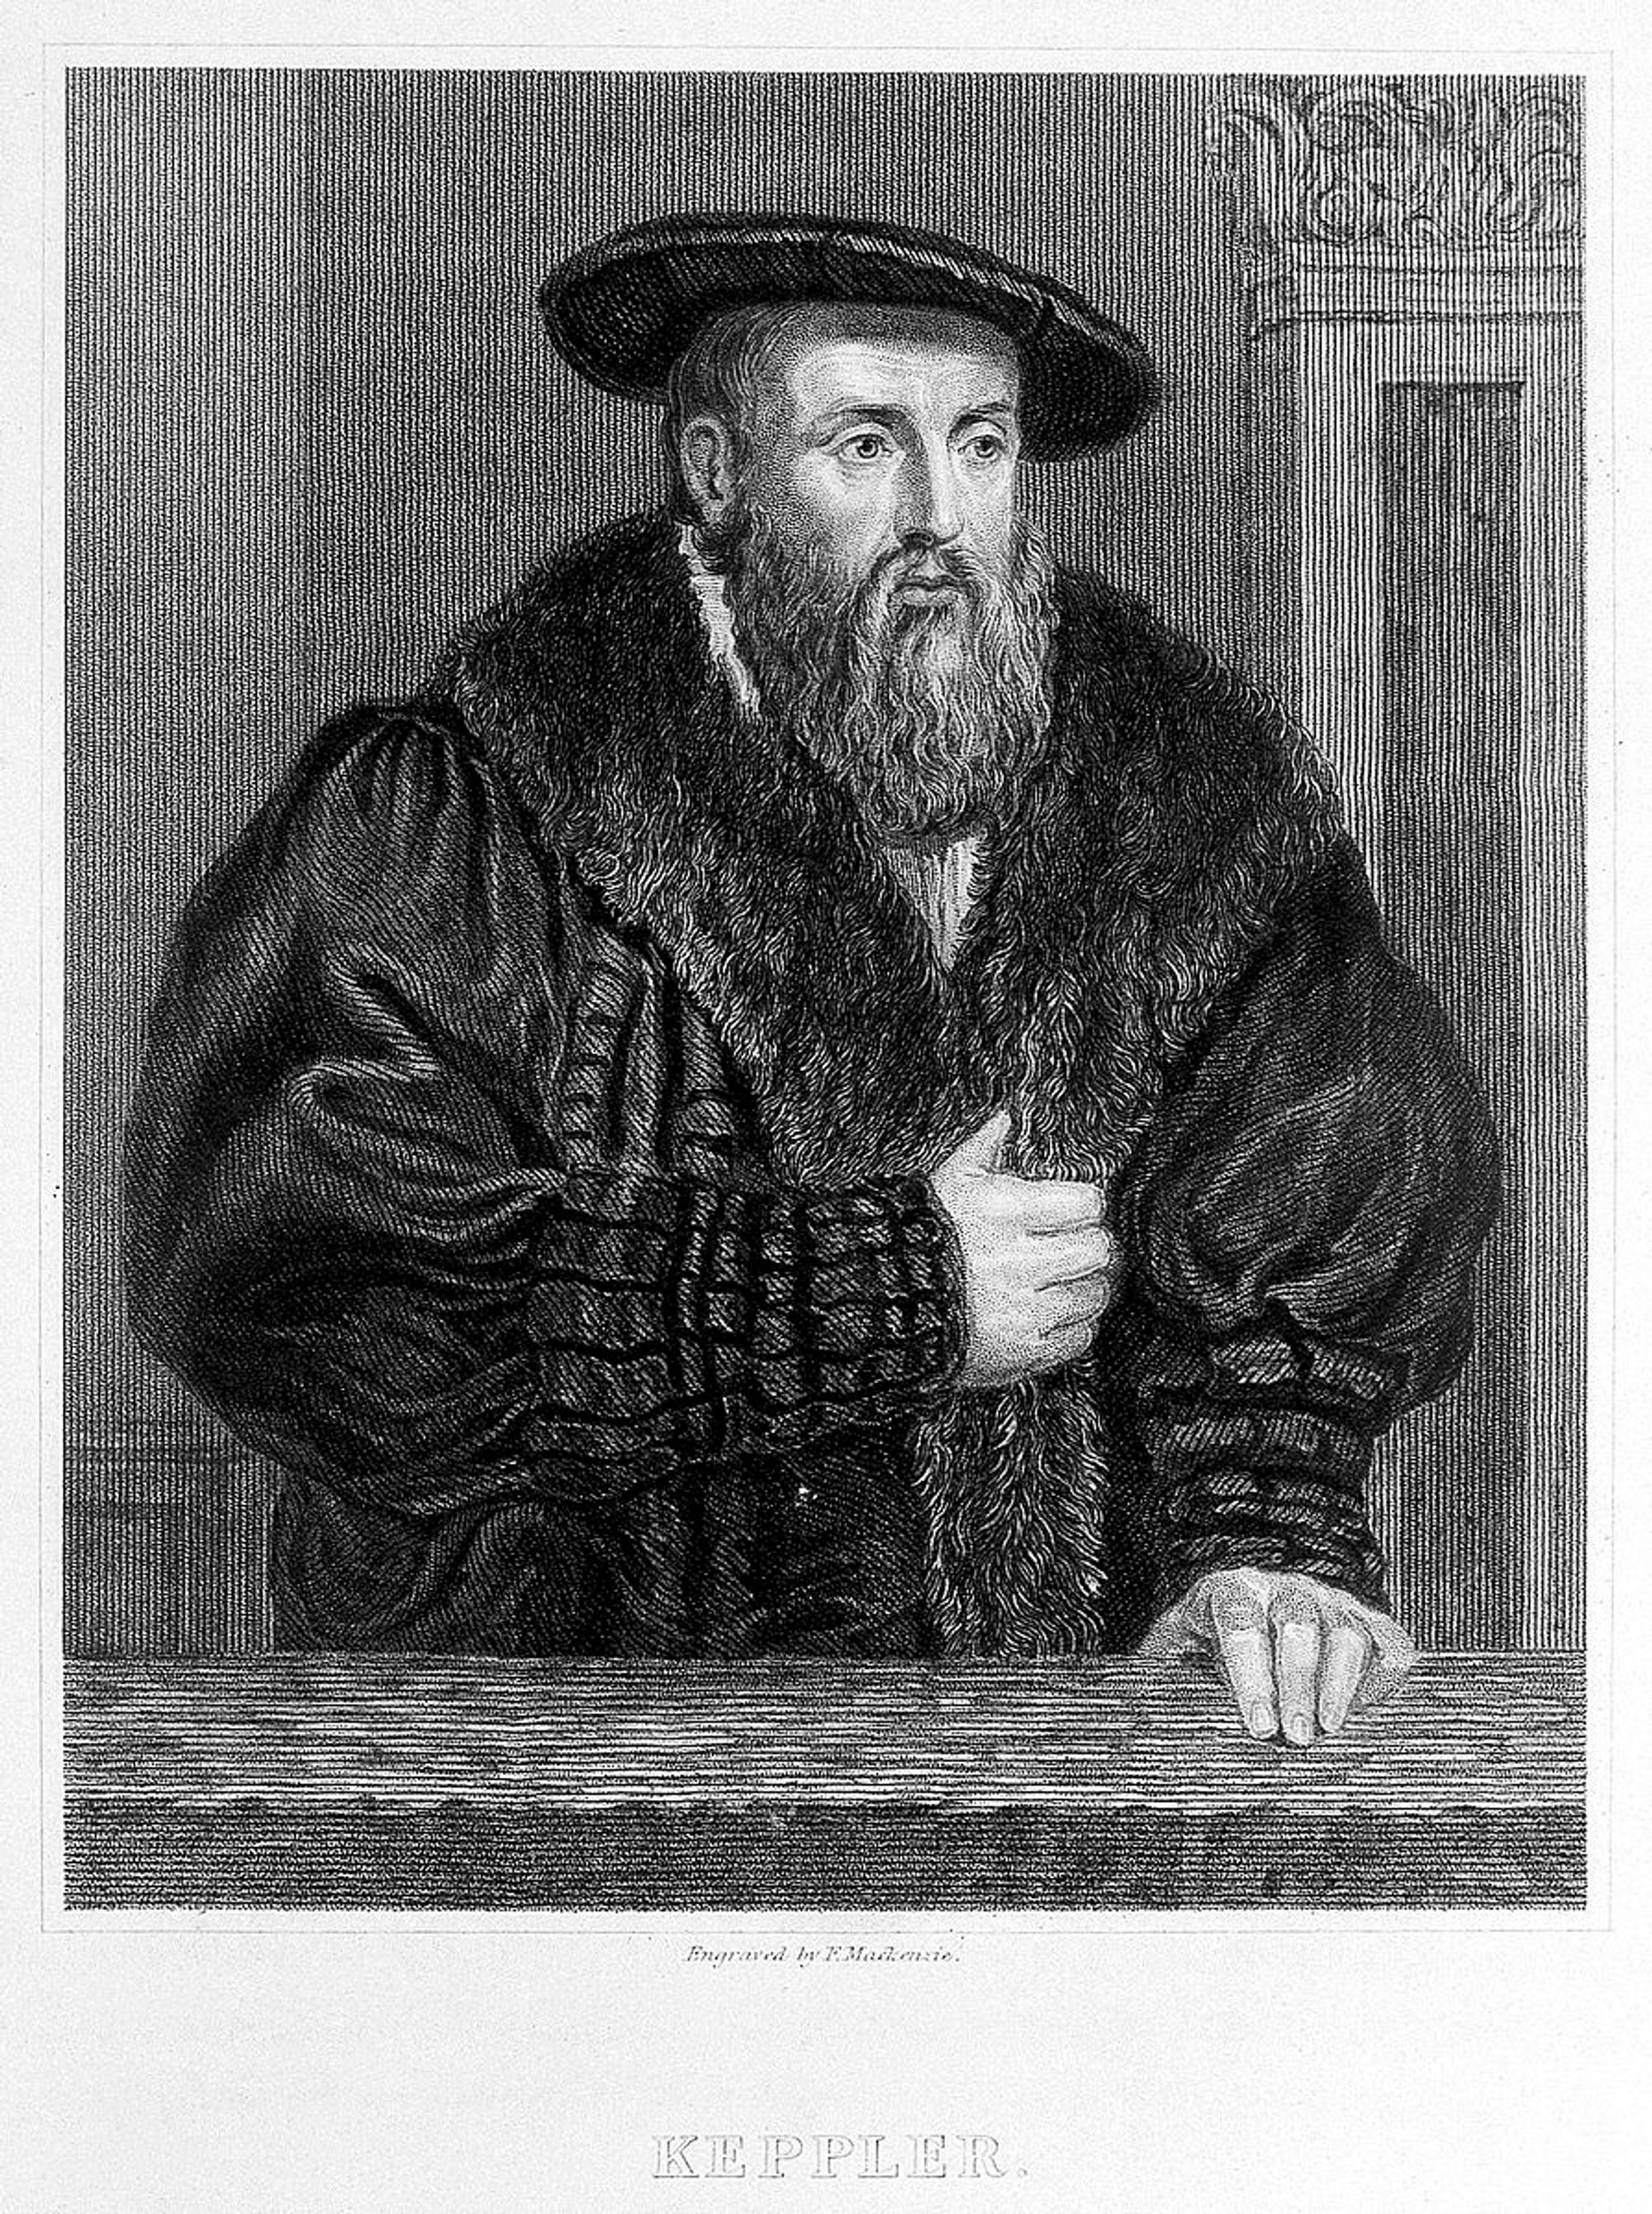 A line engraving of Johannes Kepler